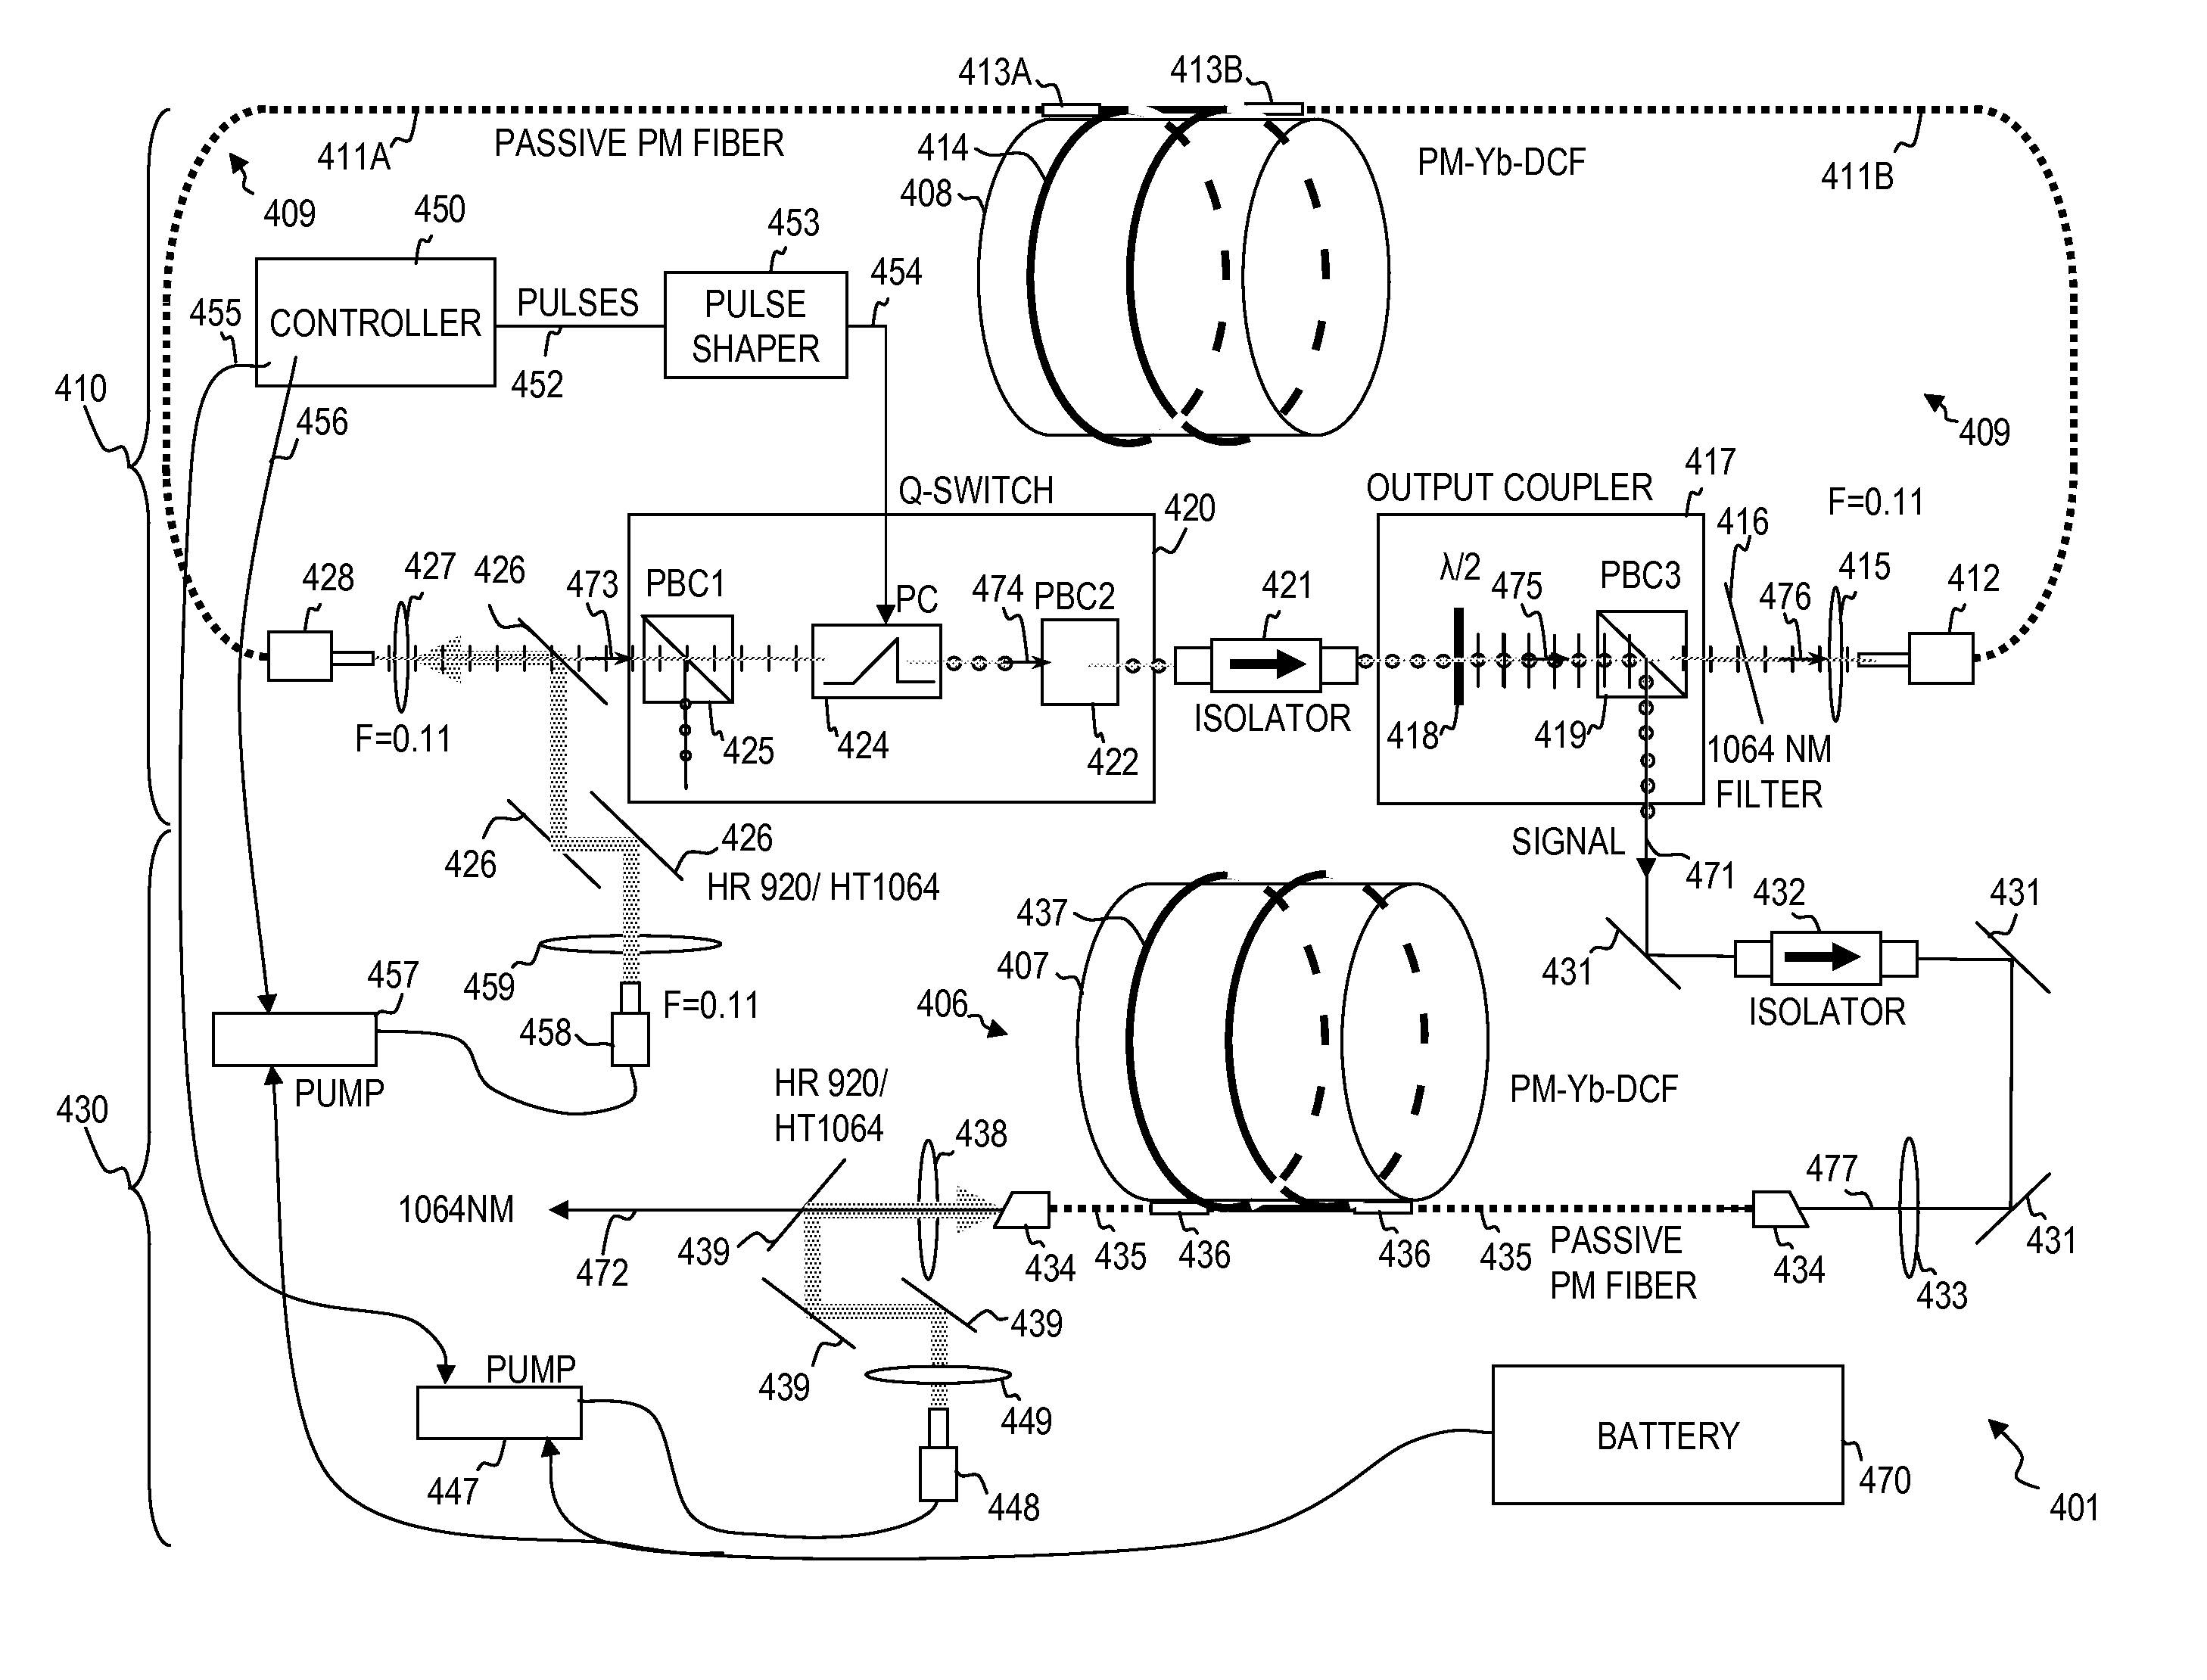 Method and apparatus for high-power, pulsed ring fiber oscillator